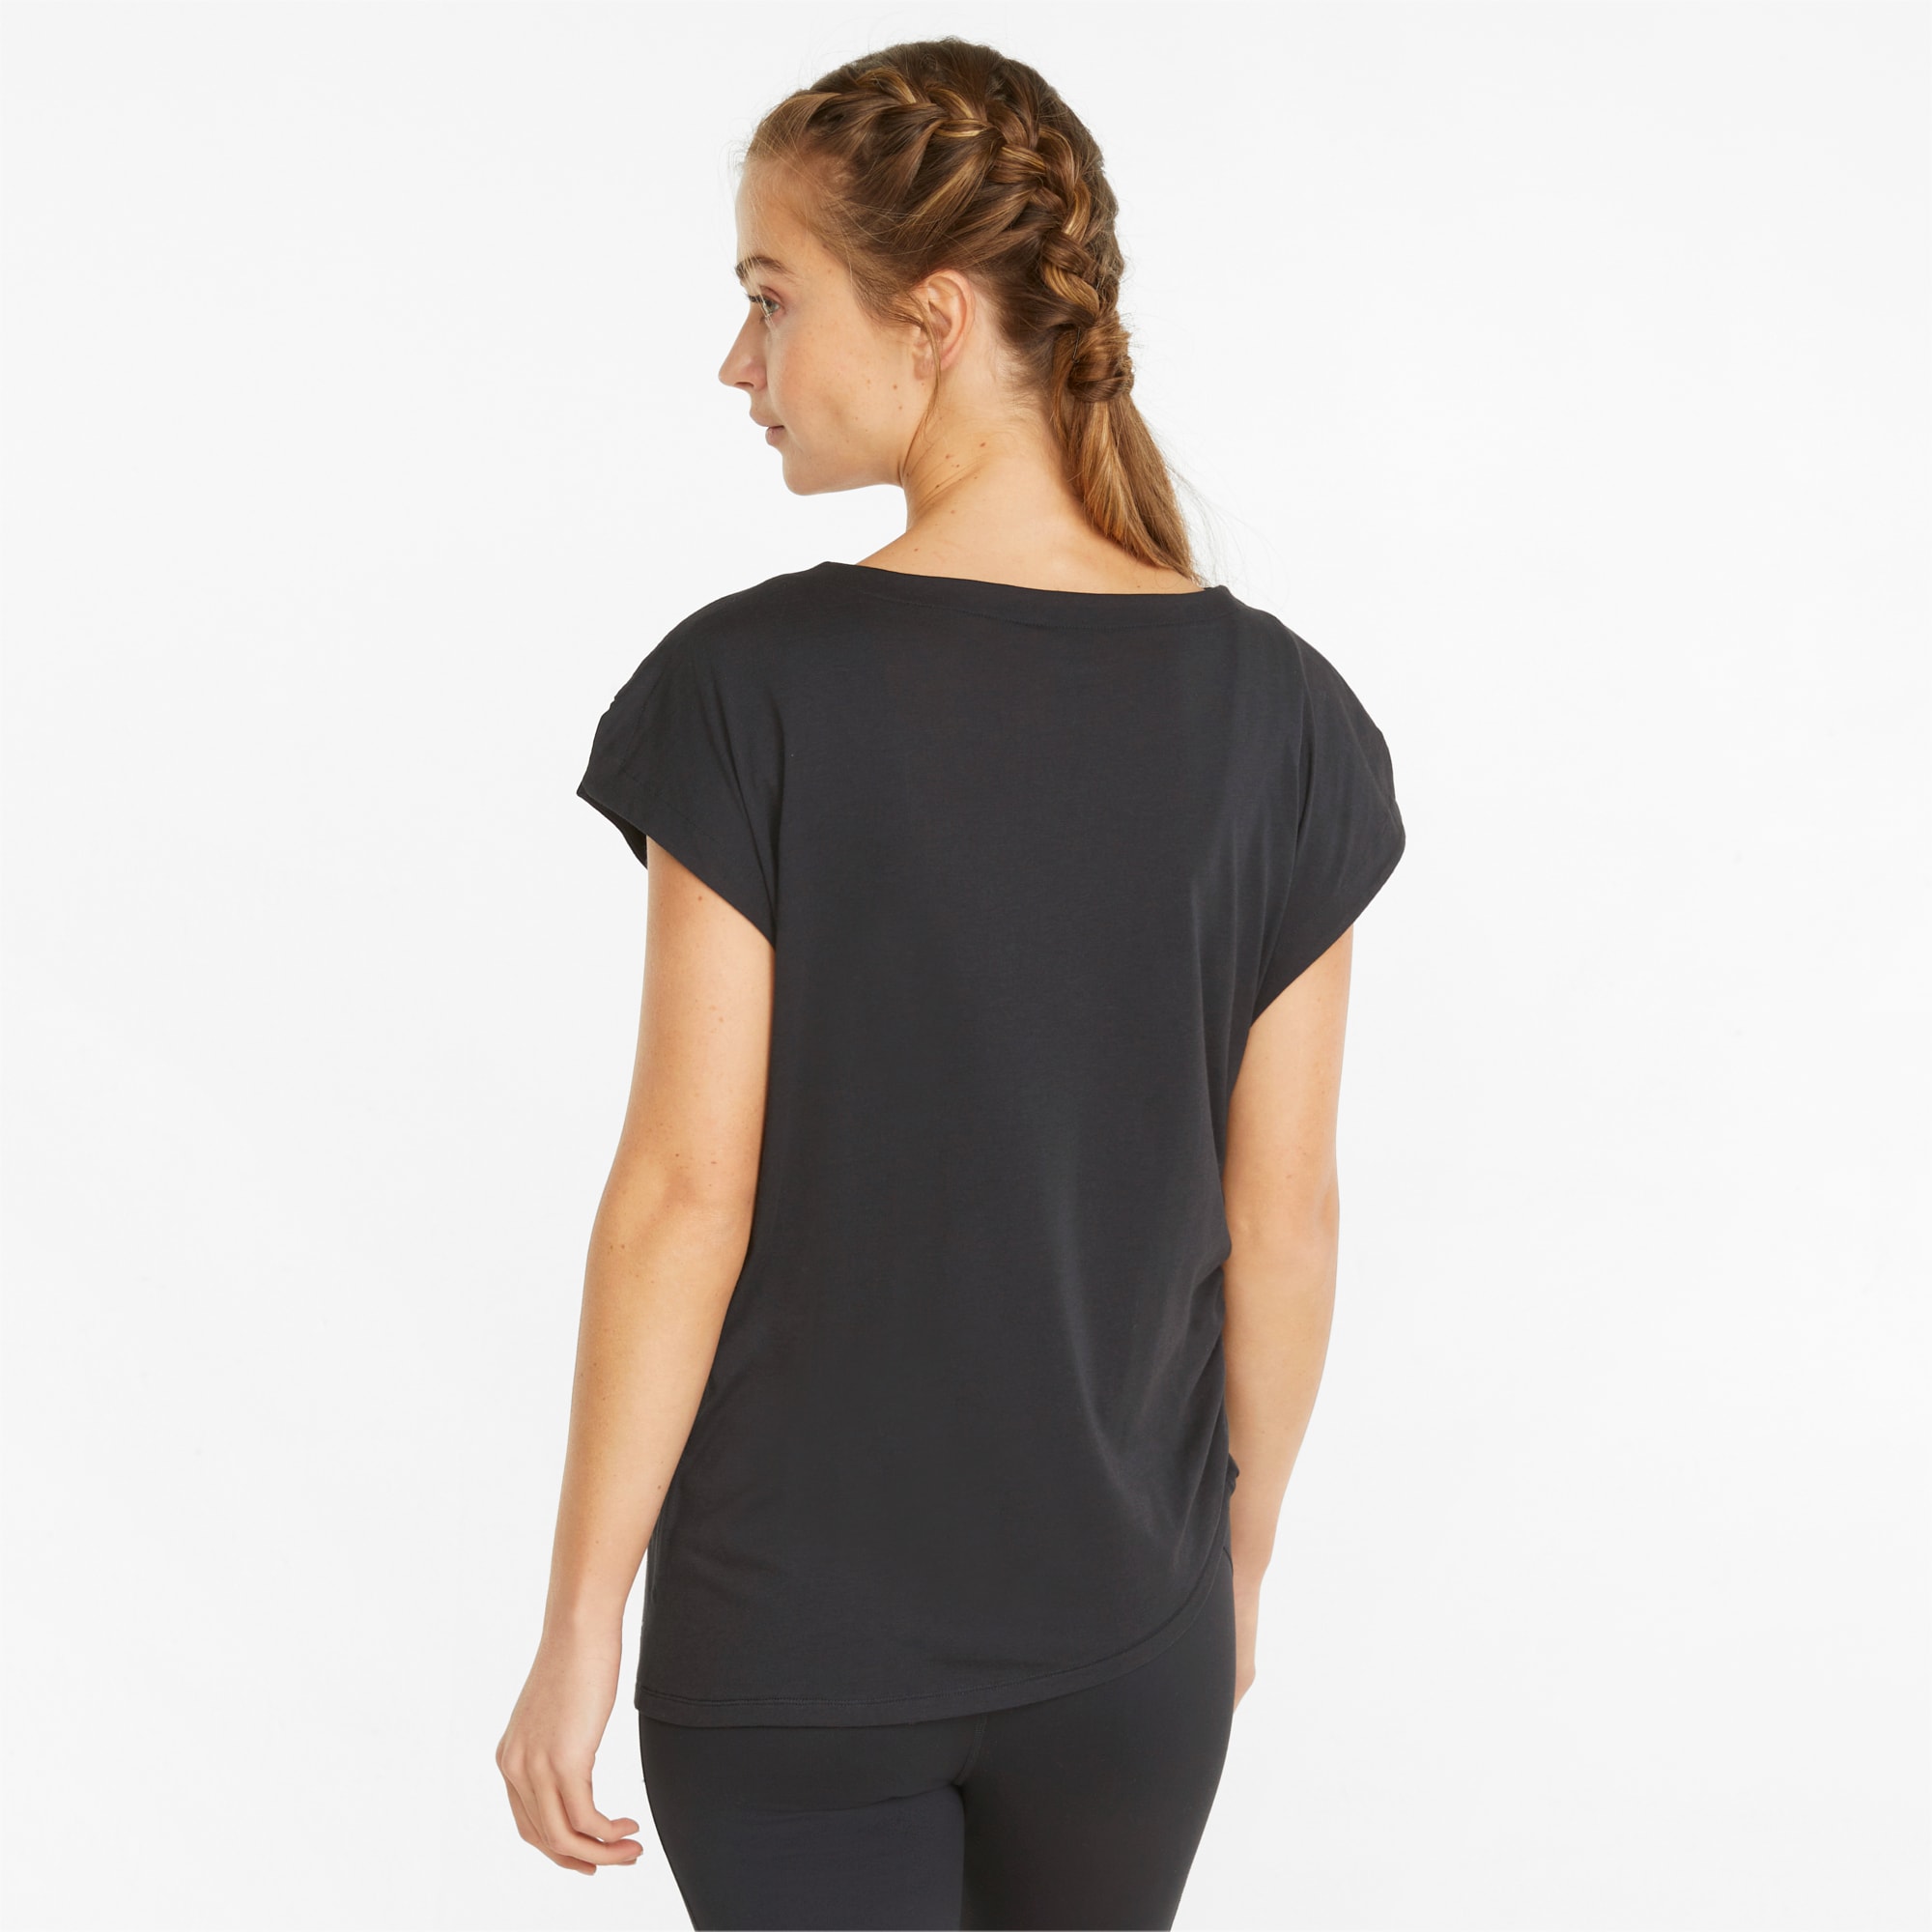 PUMA Studio Foundation Women's Training T-Shirt, Black, Size XL, Clothing